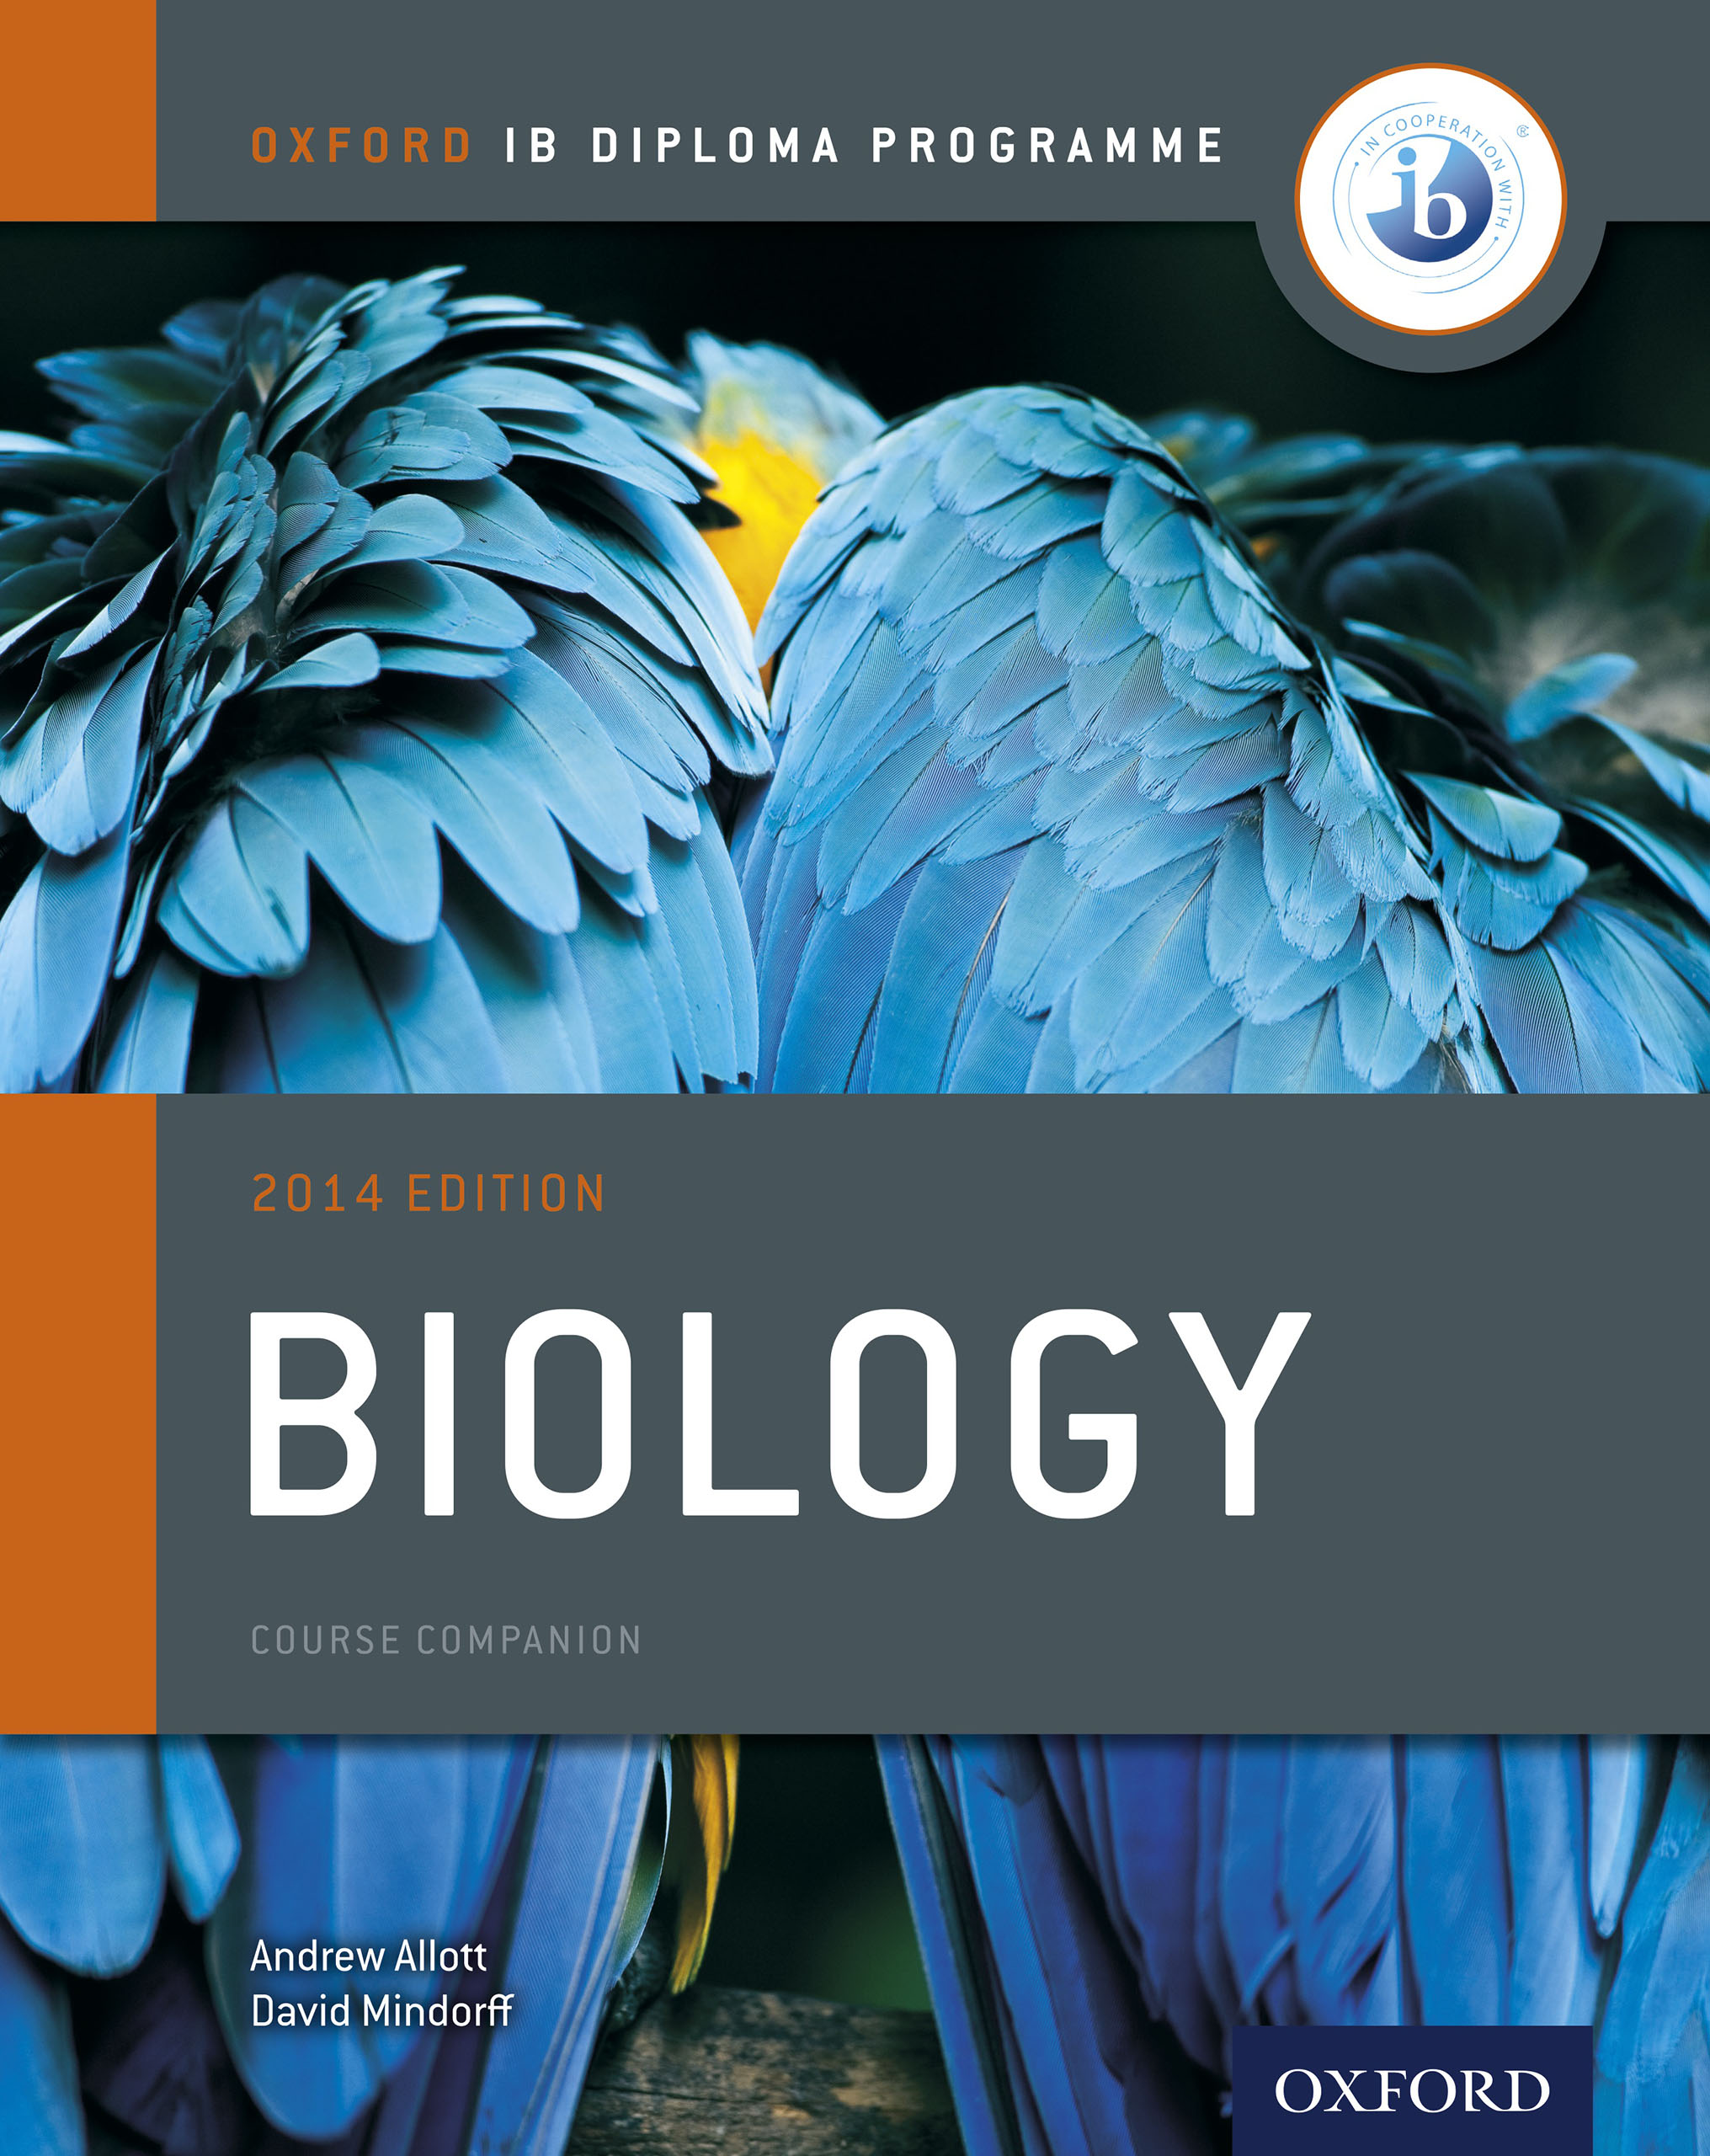 Ib biology textbook pdf free download oxford download foxit reader pdf